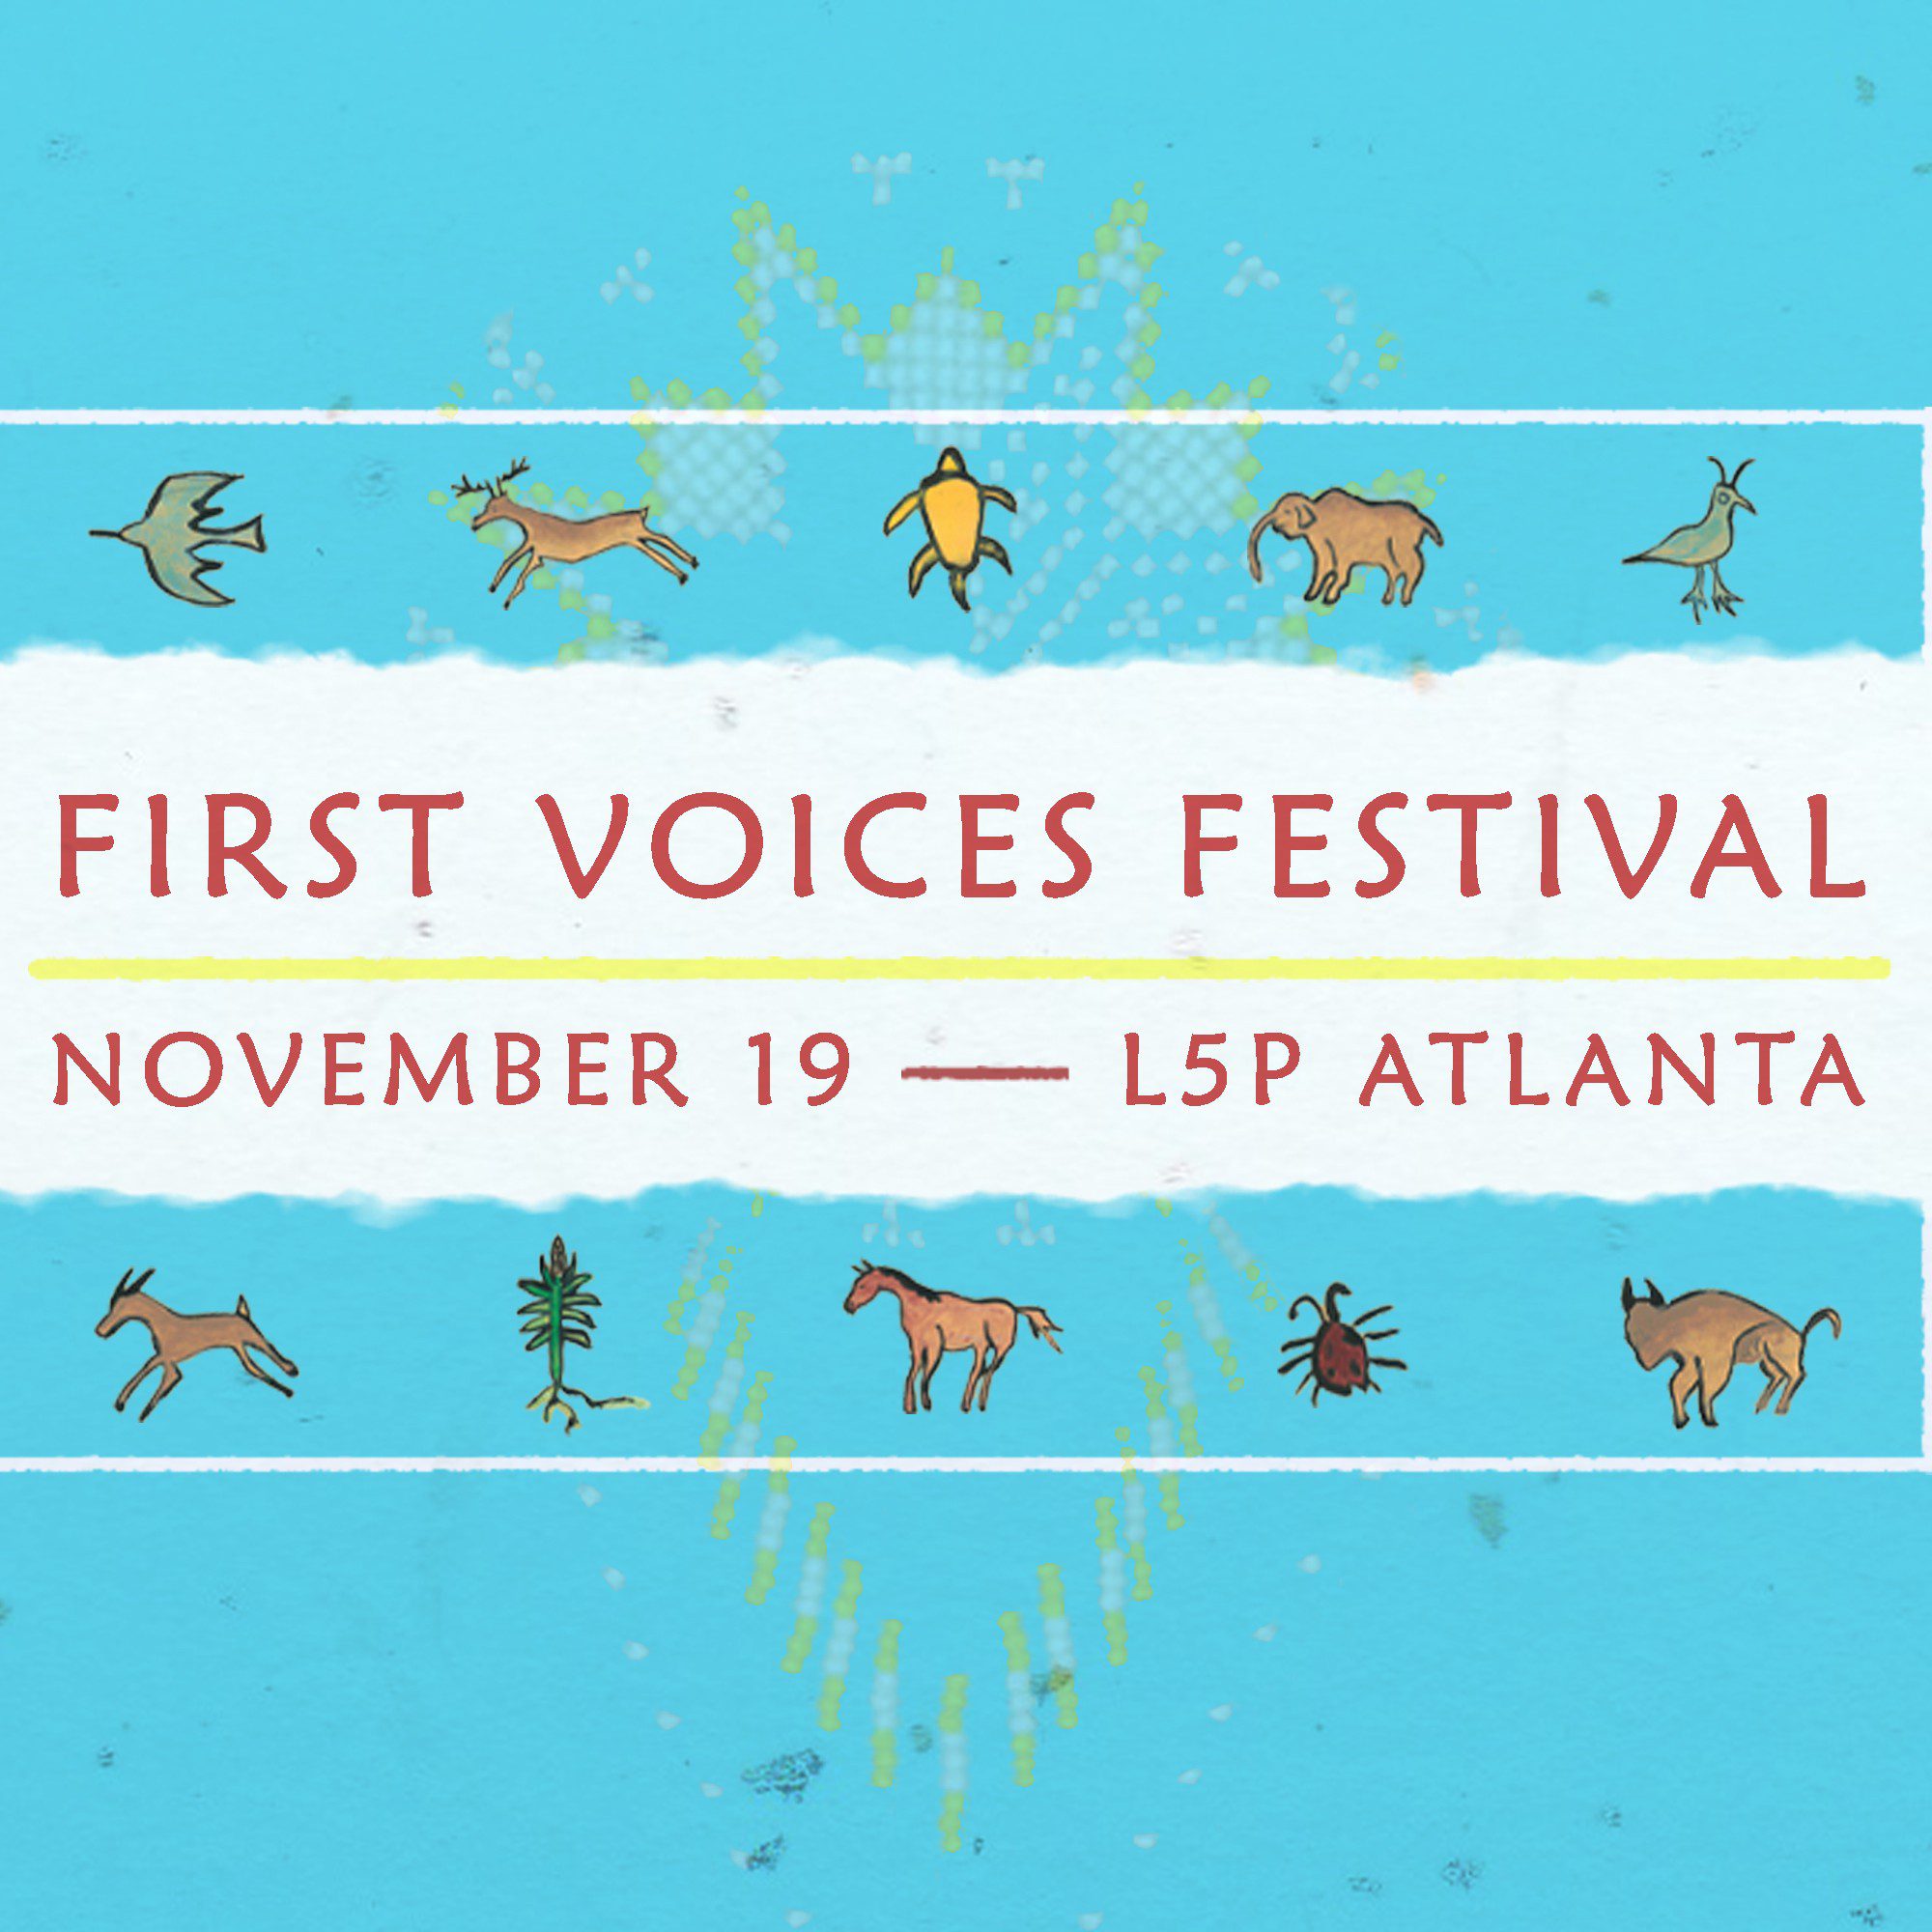 First Voices Festival, November 19 in Atlanta GA